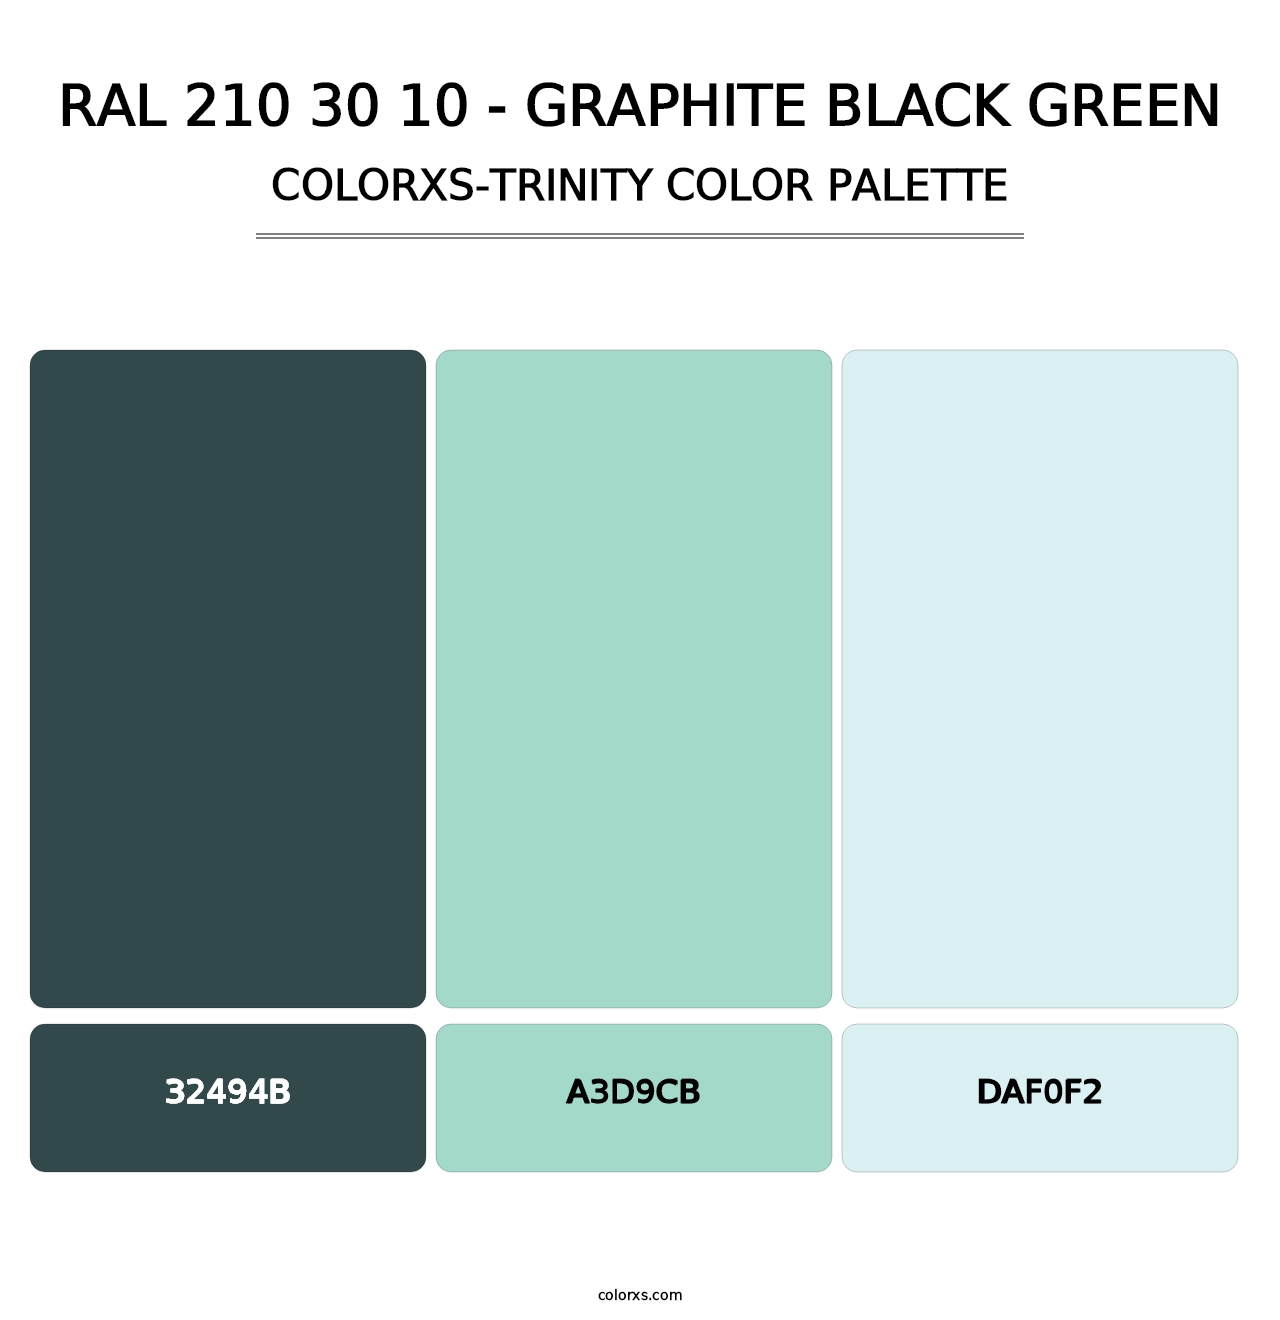 RAL 210 30 10 - Graphite Black Green - Colorxs Trinity Palette